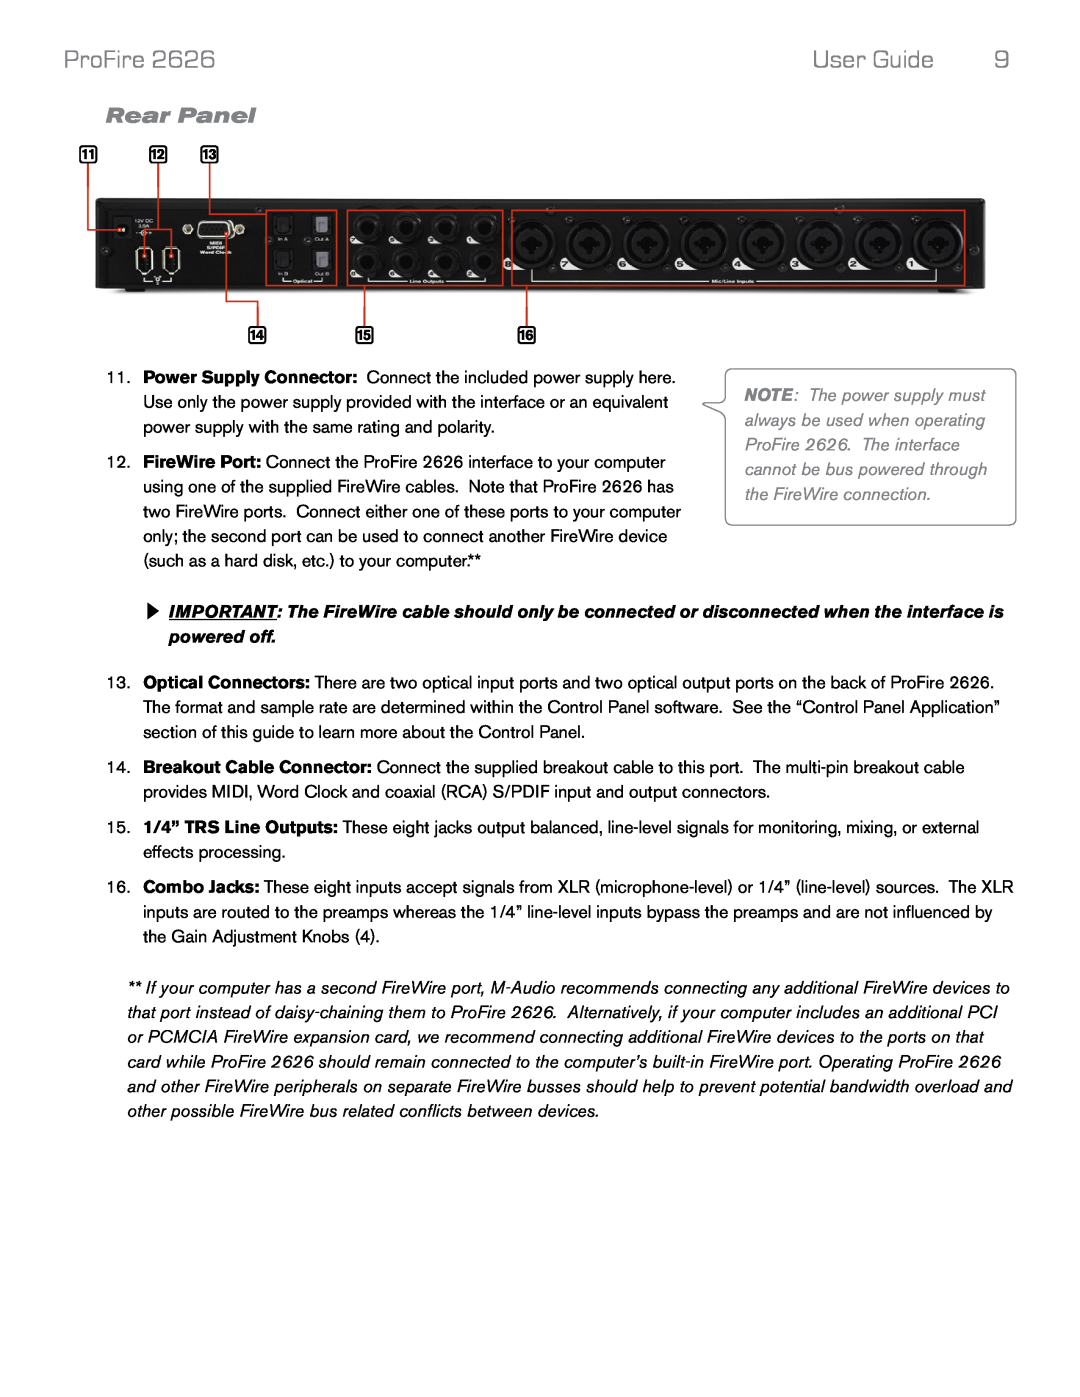 M-Audio 2626 manual Rear Panel, ProFire, User Guide 